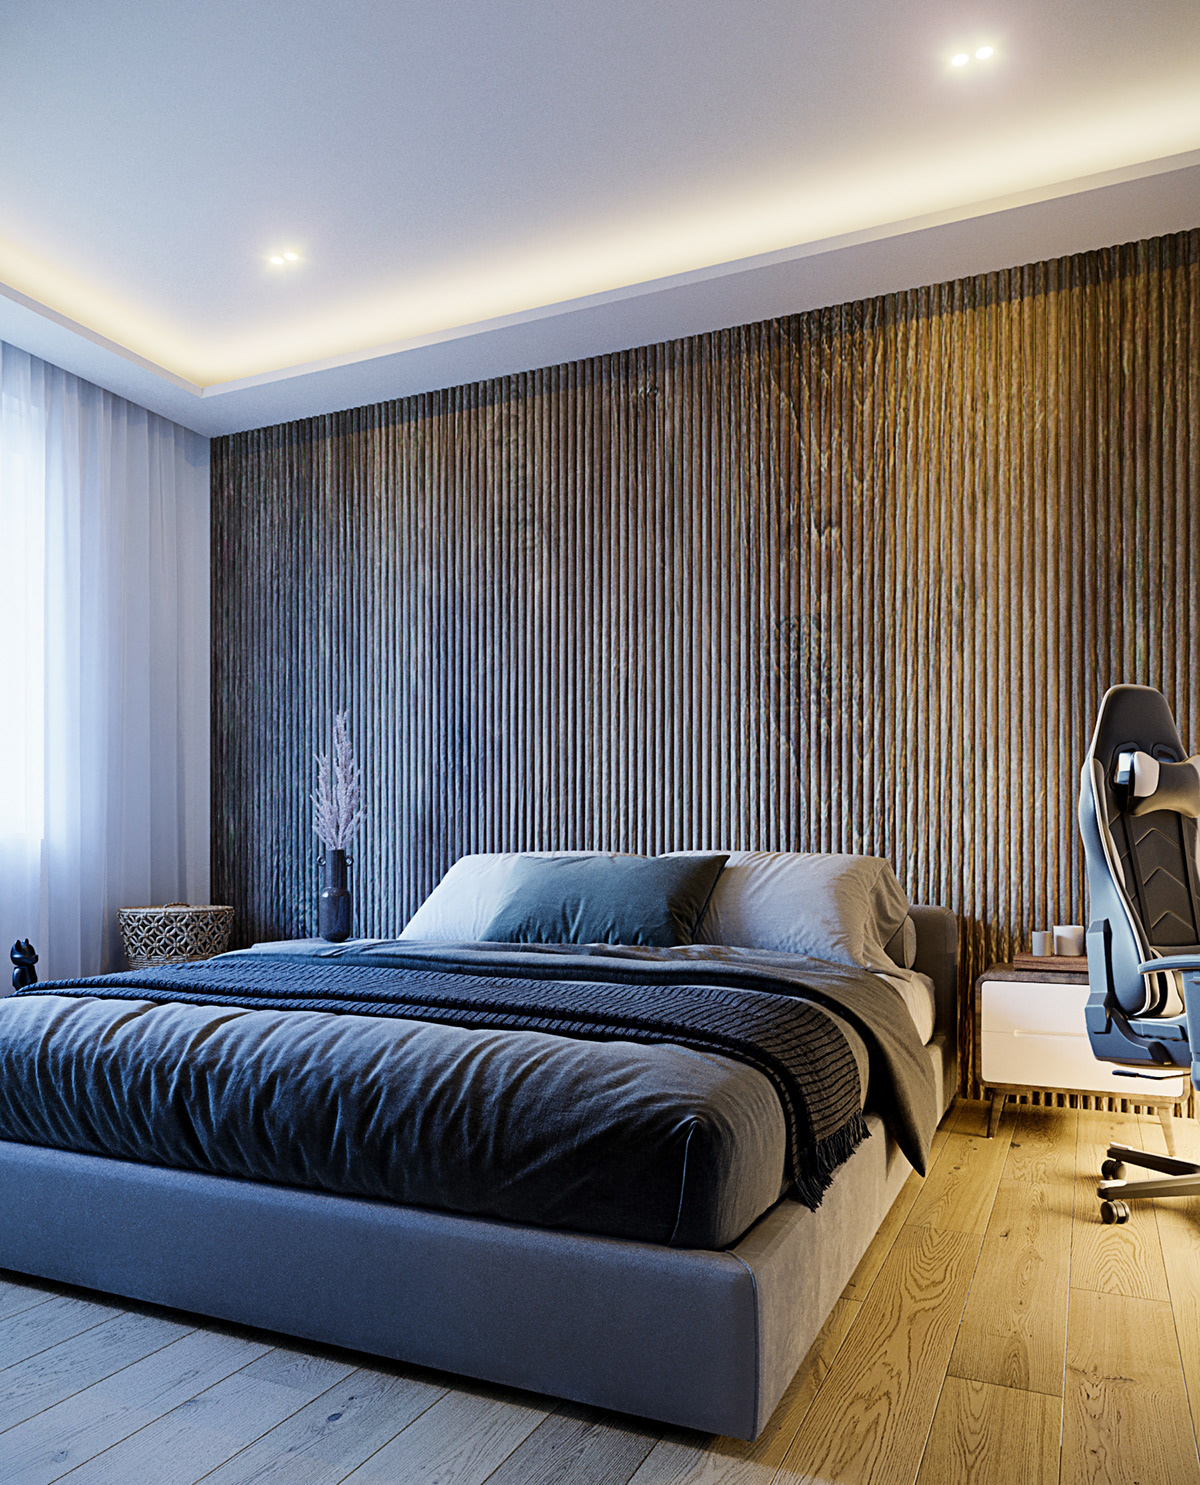 mimari yatak odası спальня архитектура bedroom interior design  architecture revit Revit Architecture Interior